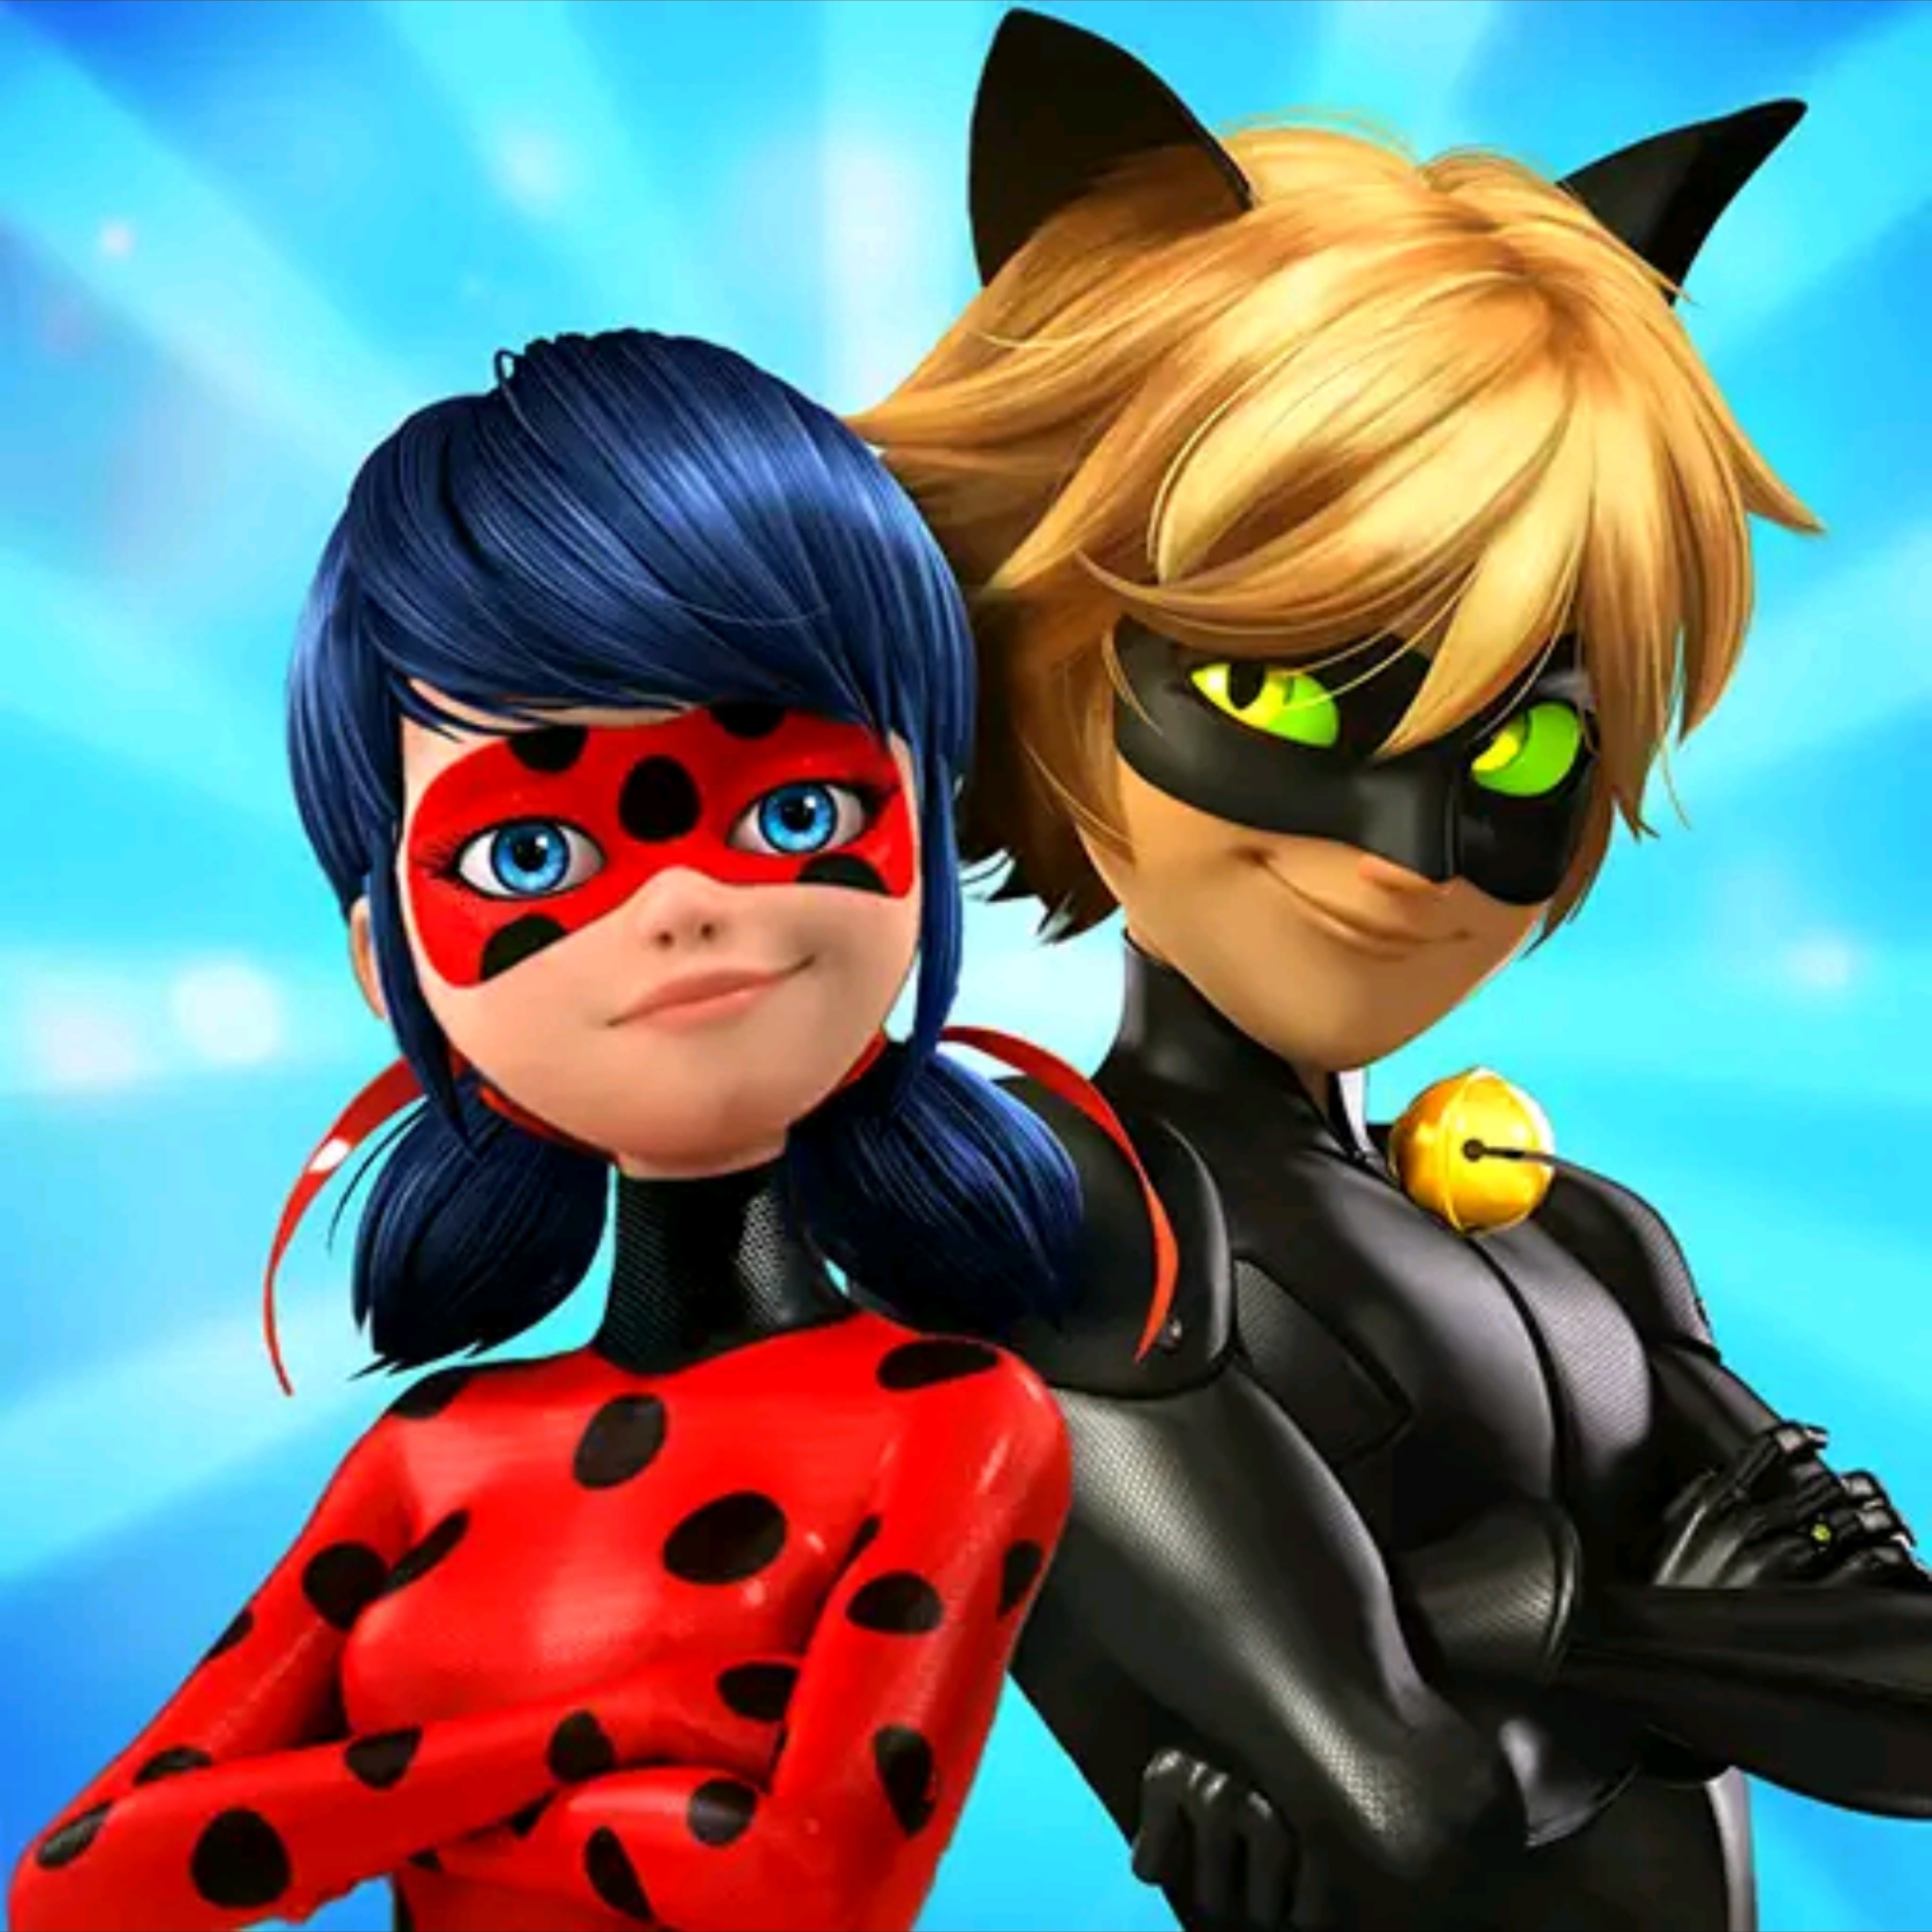 Miraculous Ladybug & Cat Noir, Miraculous Ladybug Wiki